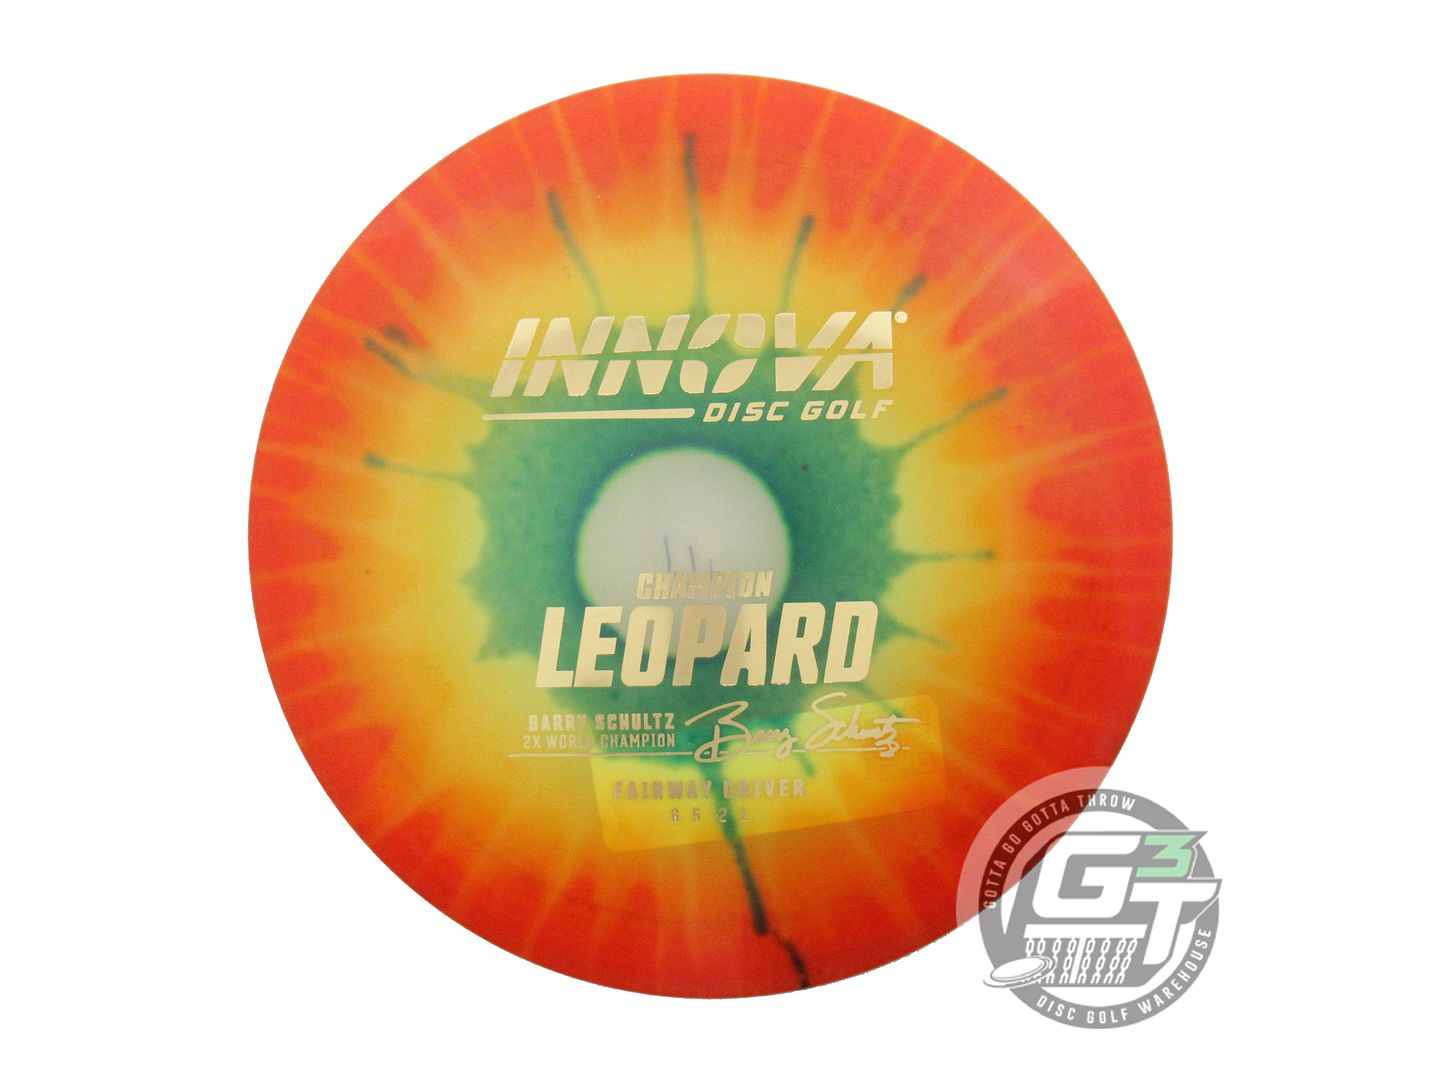 Innova I-Dye Champion Leopard Fairway Driver Golf Disc (Individually Listed)